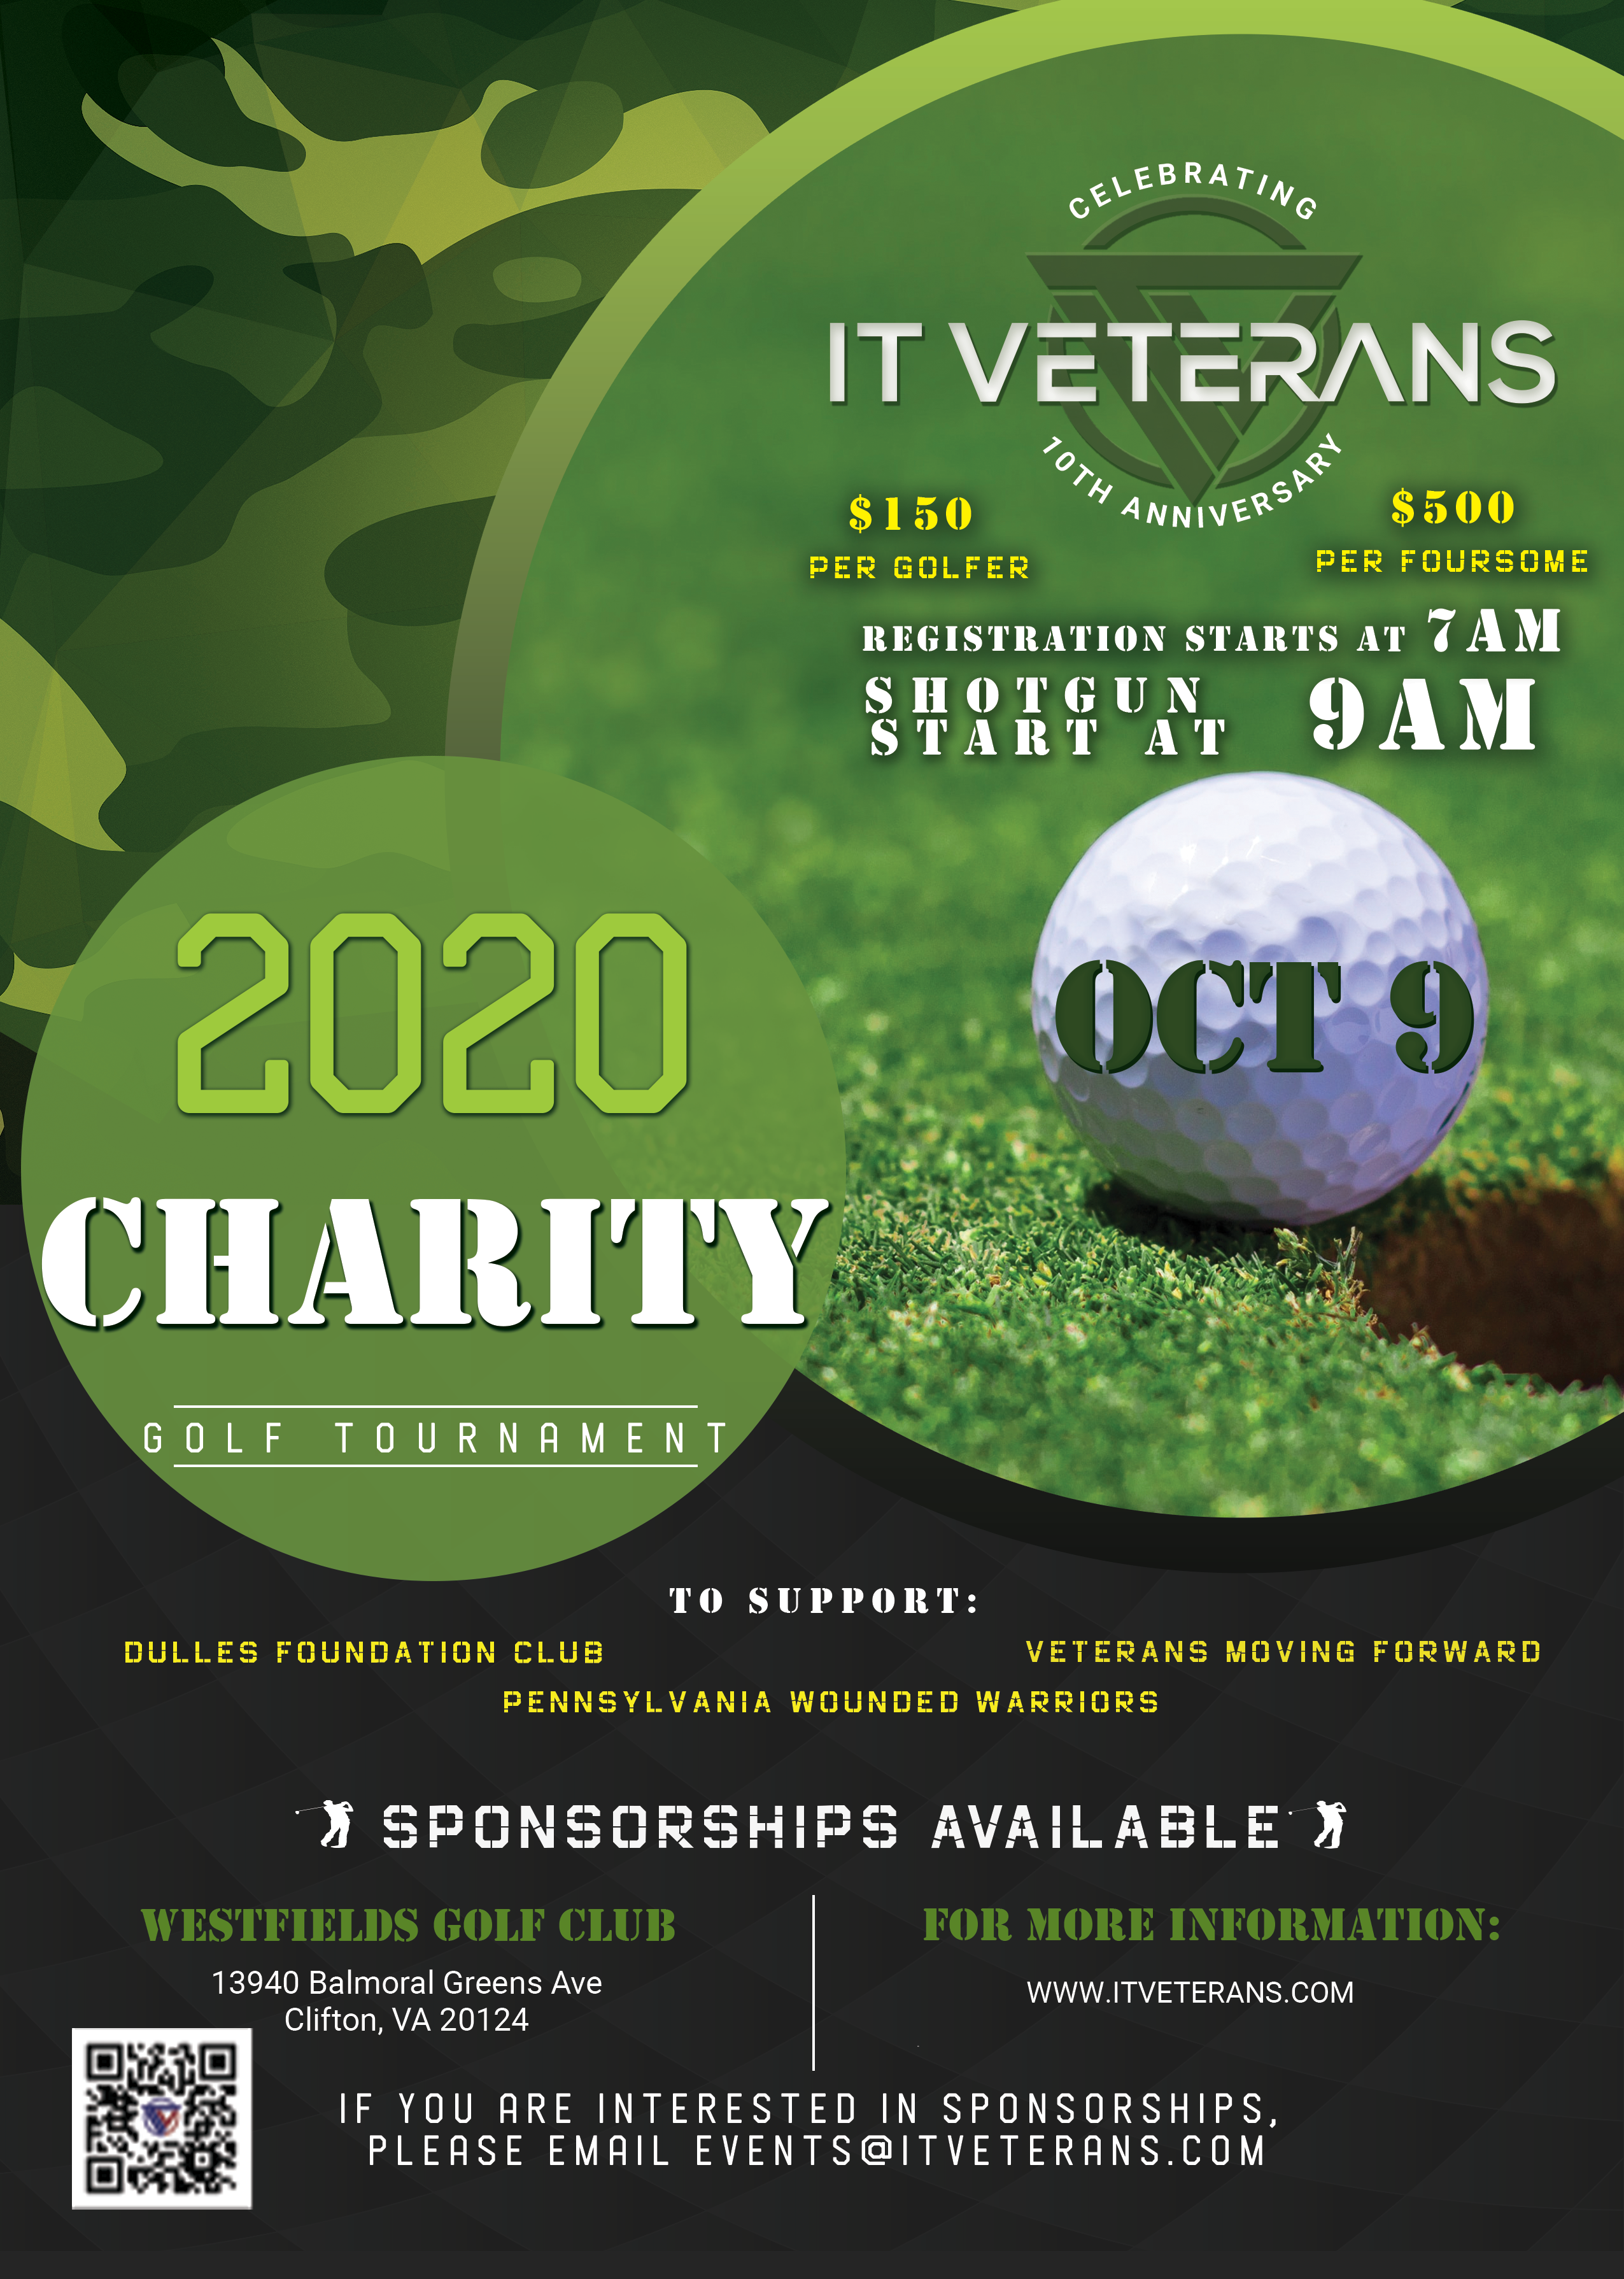 2020 charity golf tournament